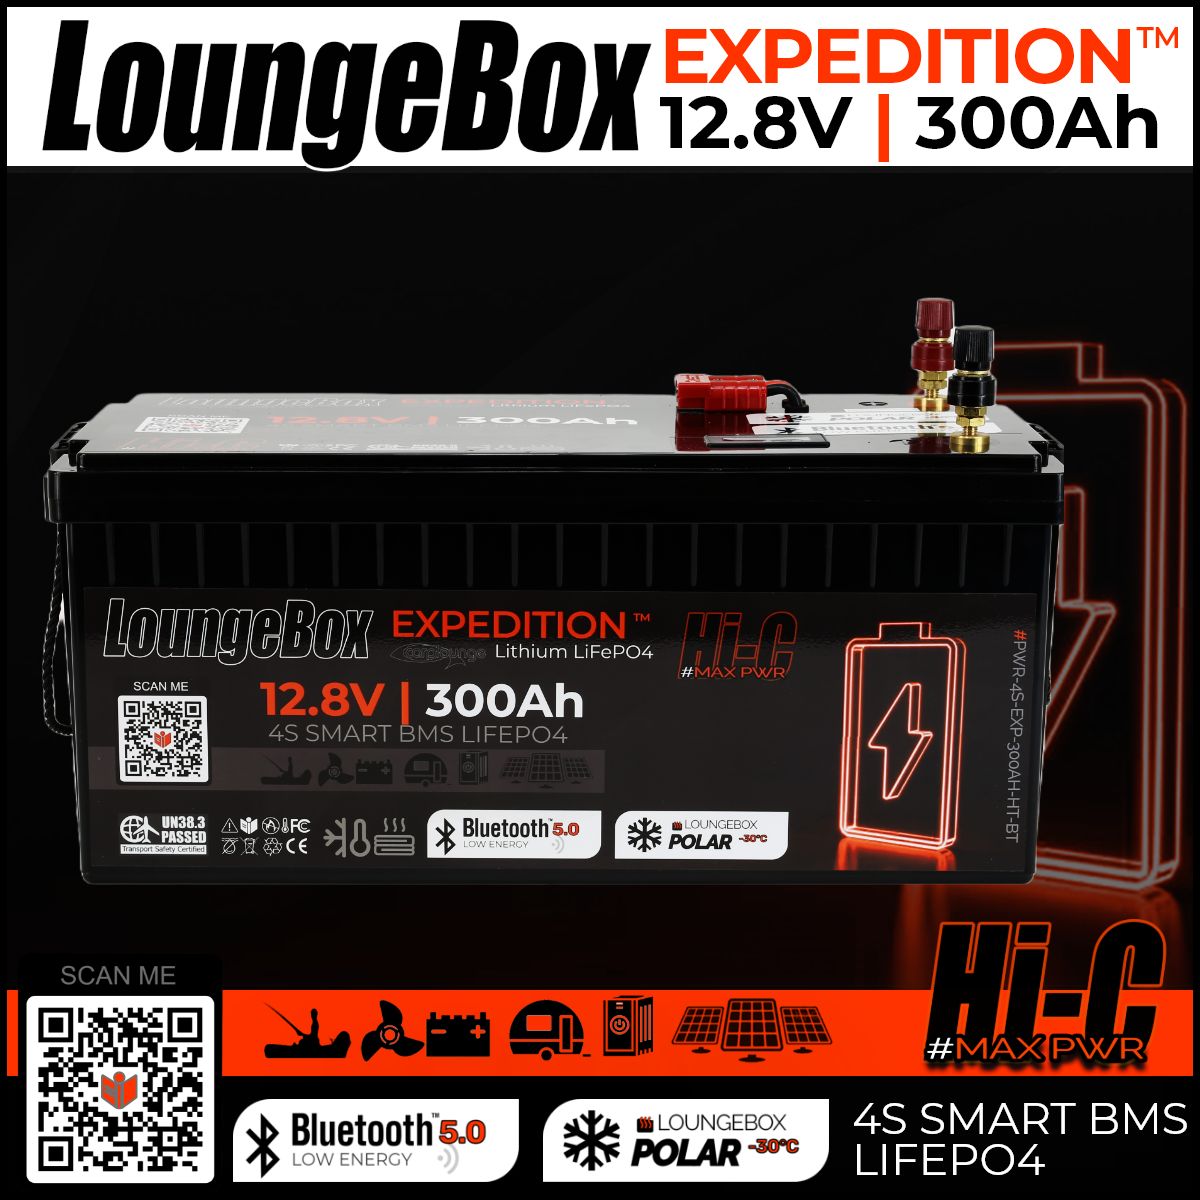 LoungeBox Expedition ❄ POLAR -30° ❄, #1 Winter Power ⚡